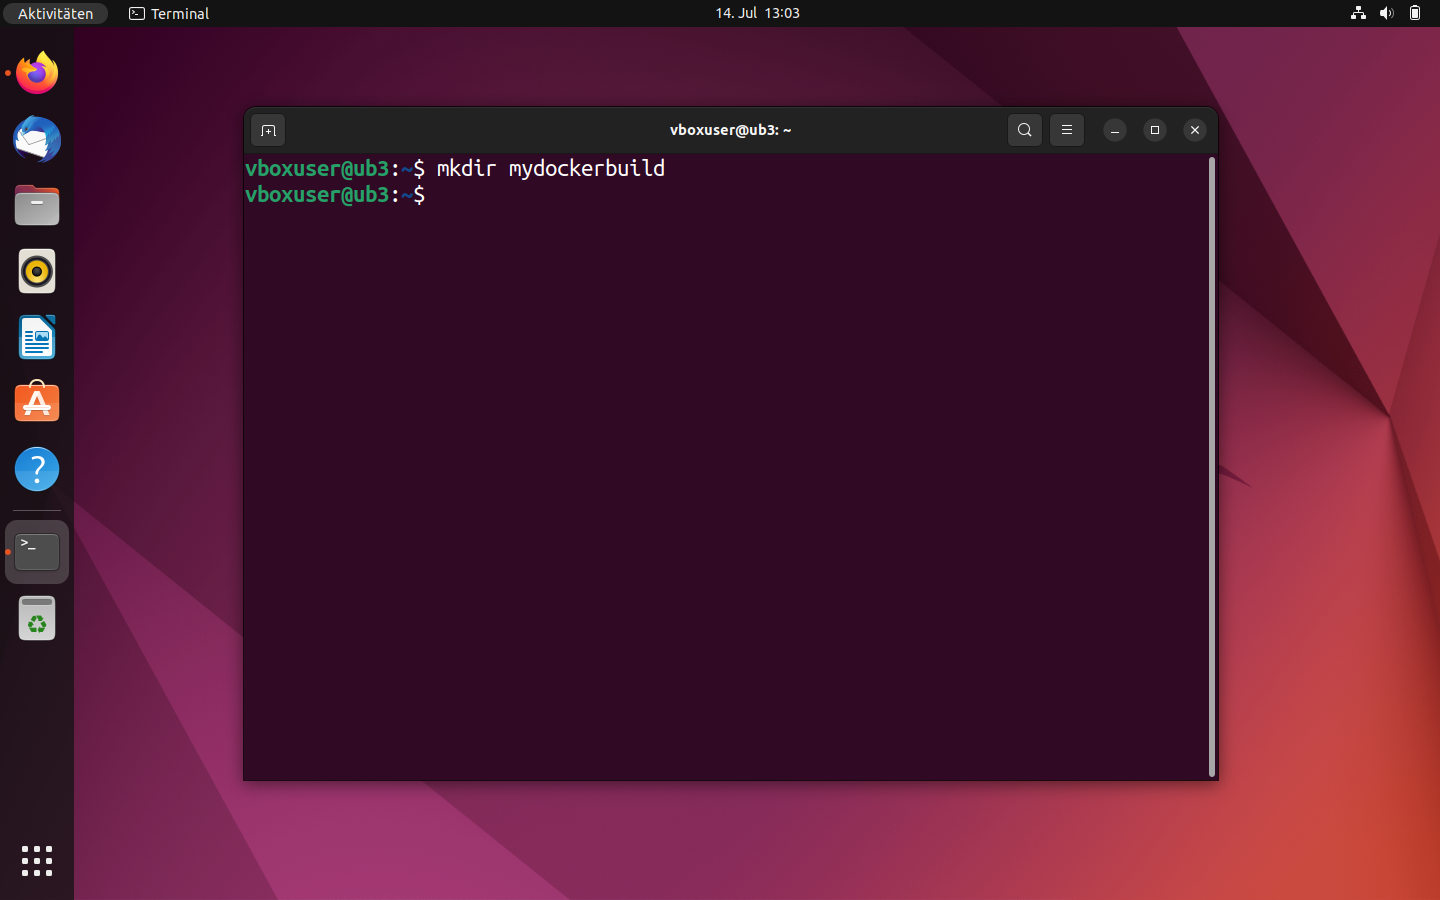 Ubuntu-Terminal: Der Befehl mkdir